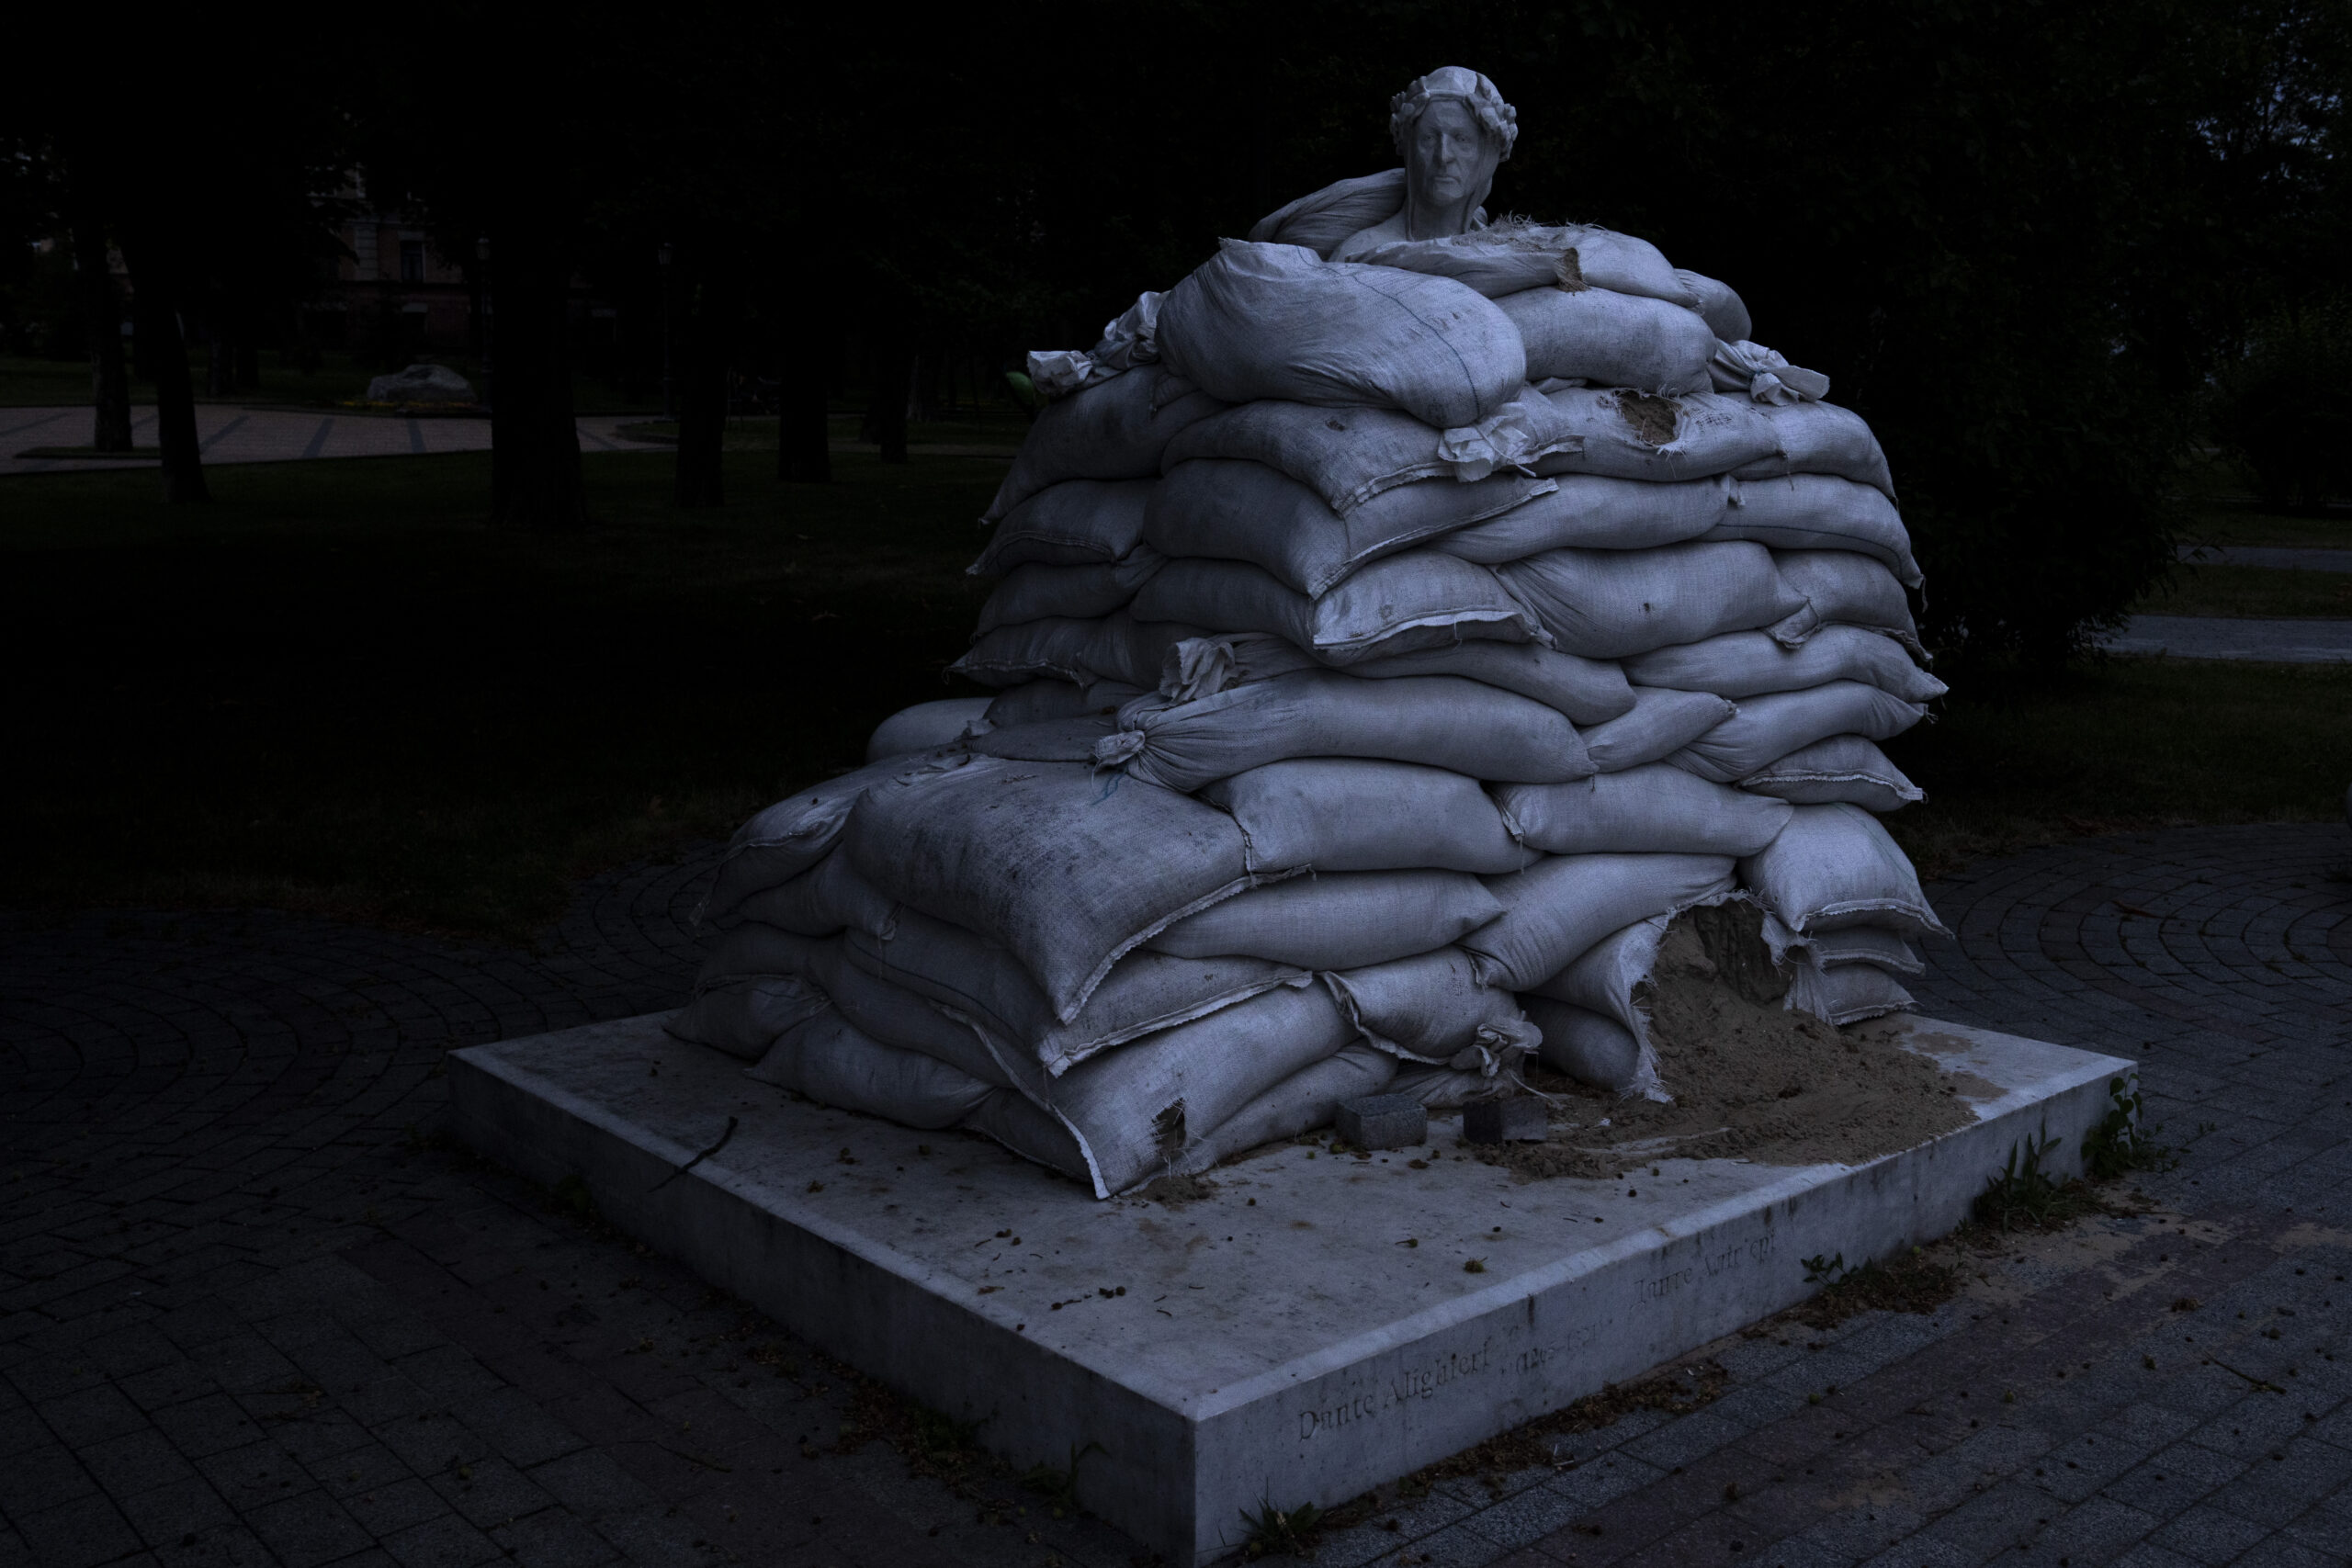 The sculpture of prominent Italian poet Dante Alighieri, is protected by sandbags, on Vladimir's Hill in Kyiv, Ukraine, Thursday, June 23, 2022. (AP Photo/Nariman El-Mofty)